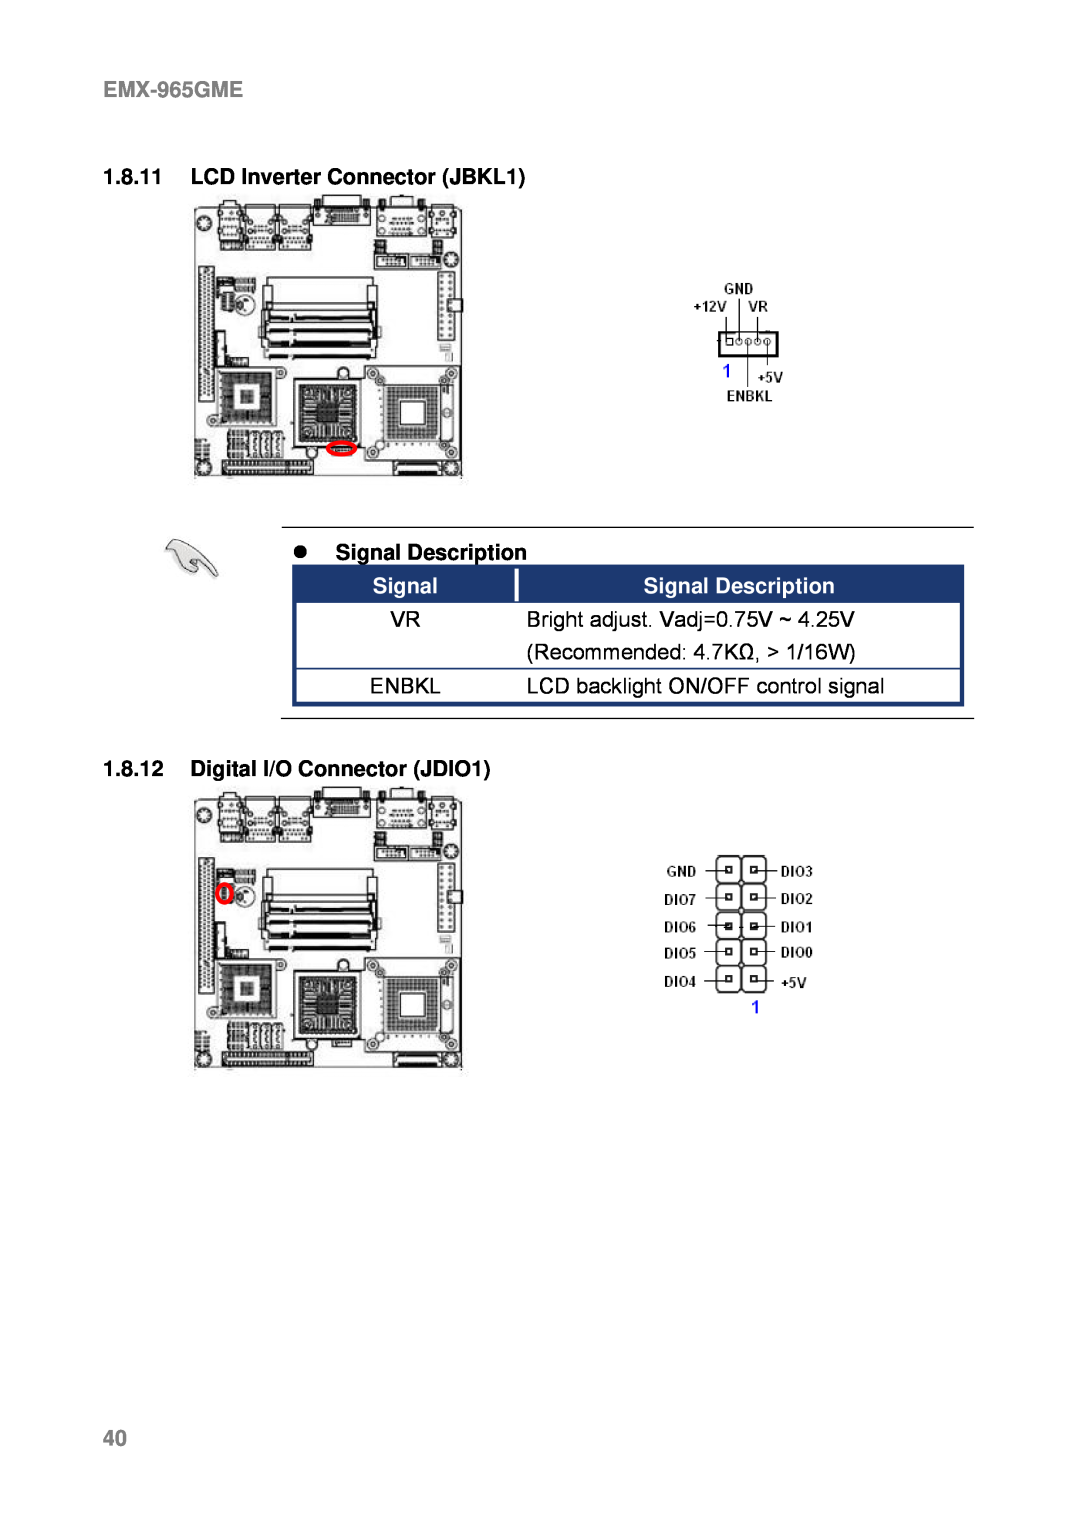 Intel EMX-965GME 1.8.11LCD Inverter Connector JBKL1, zSignal Description, 1.8.12Digital I/O Connector JDIO1, Enbkl 